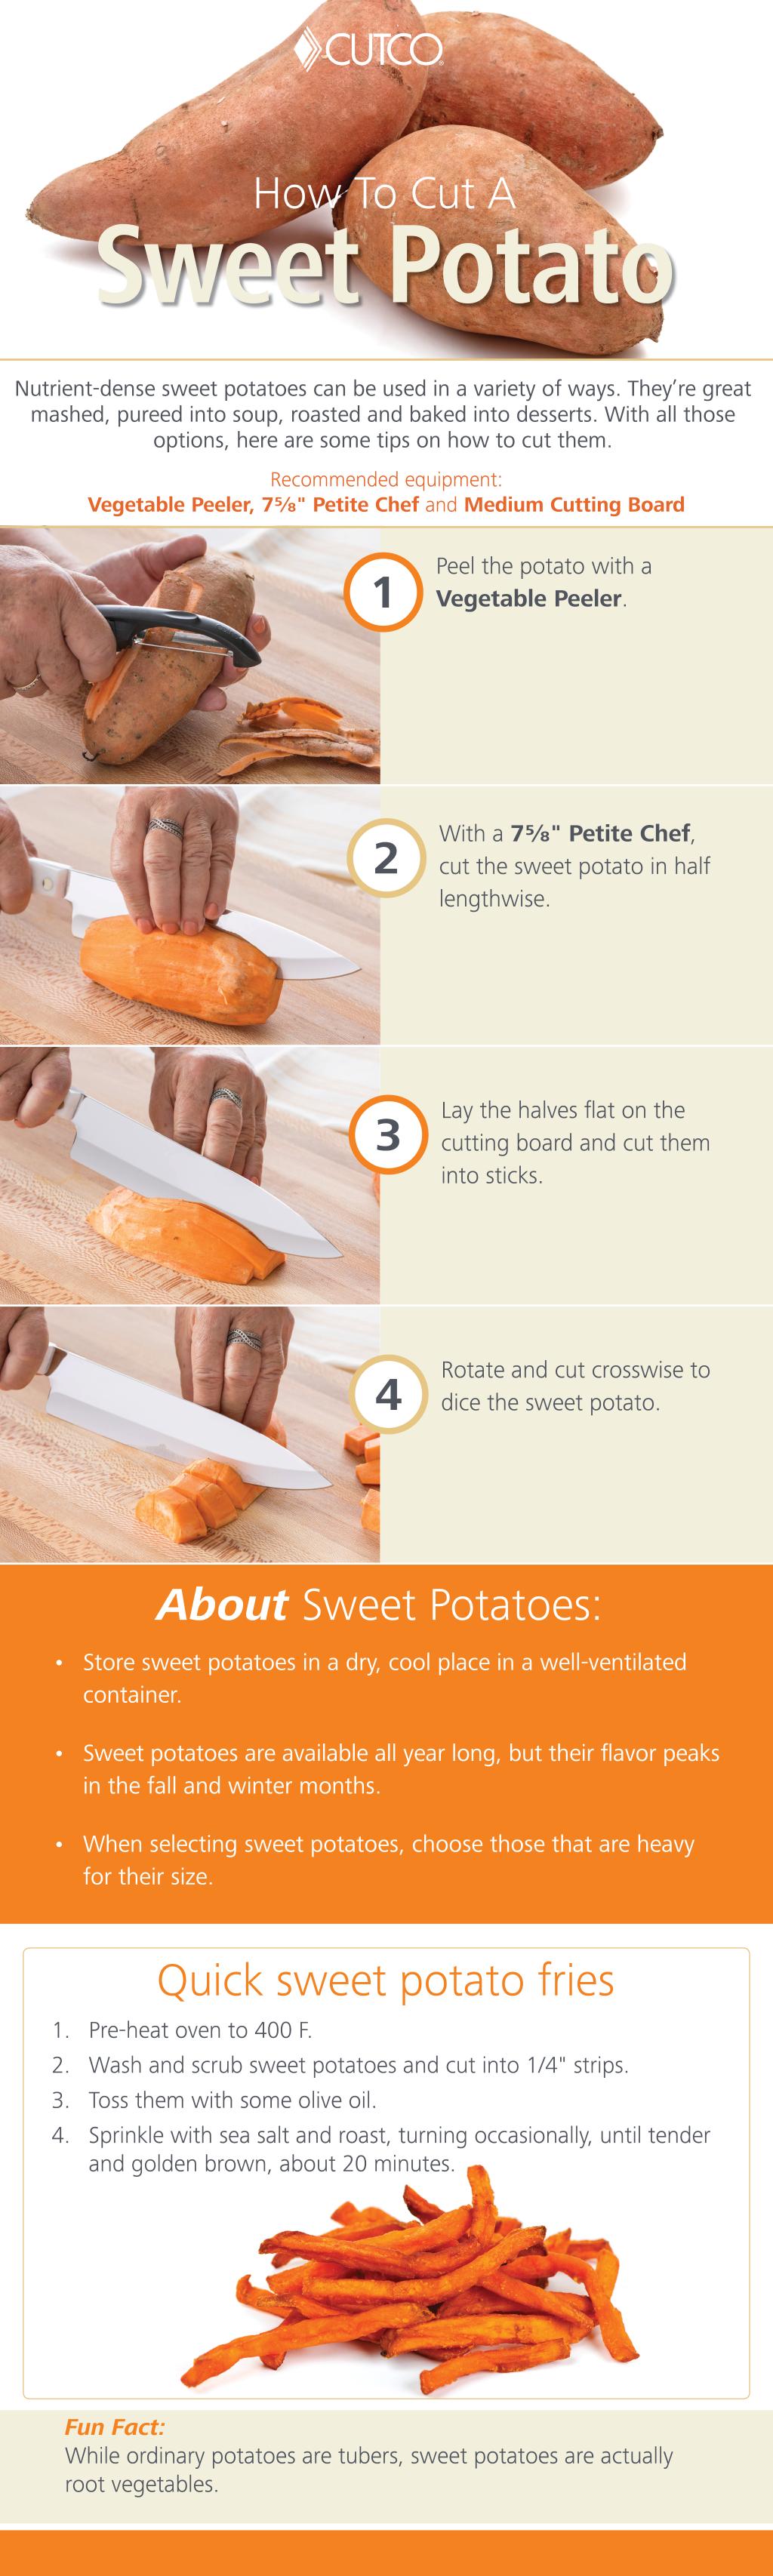 https://images.cutco.com/learn/2018/how-to-cut-sweet-potato-l.jpg